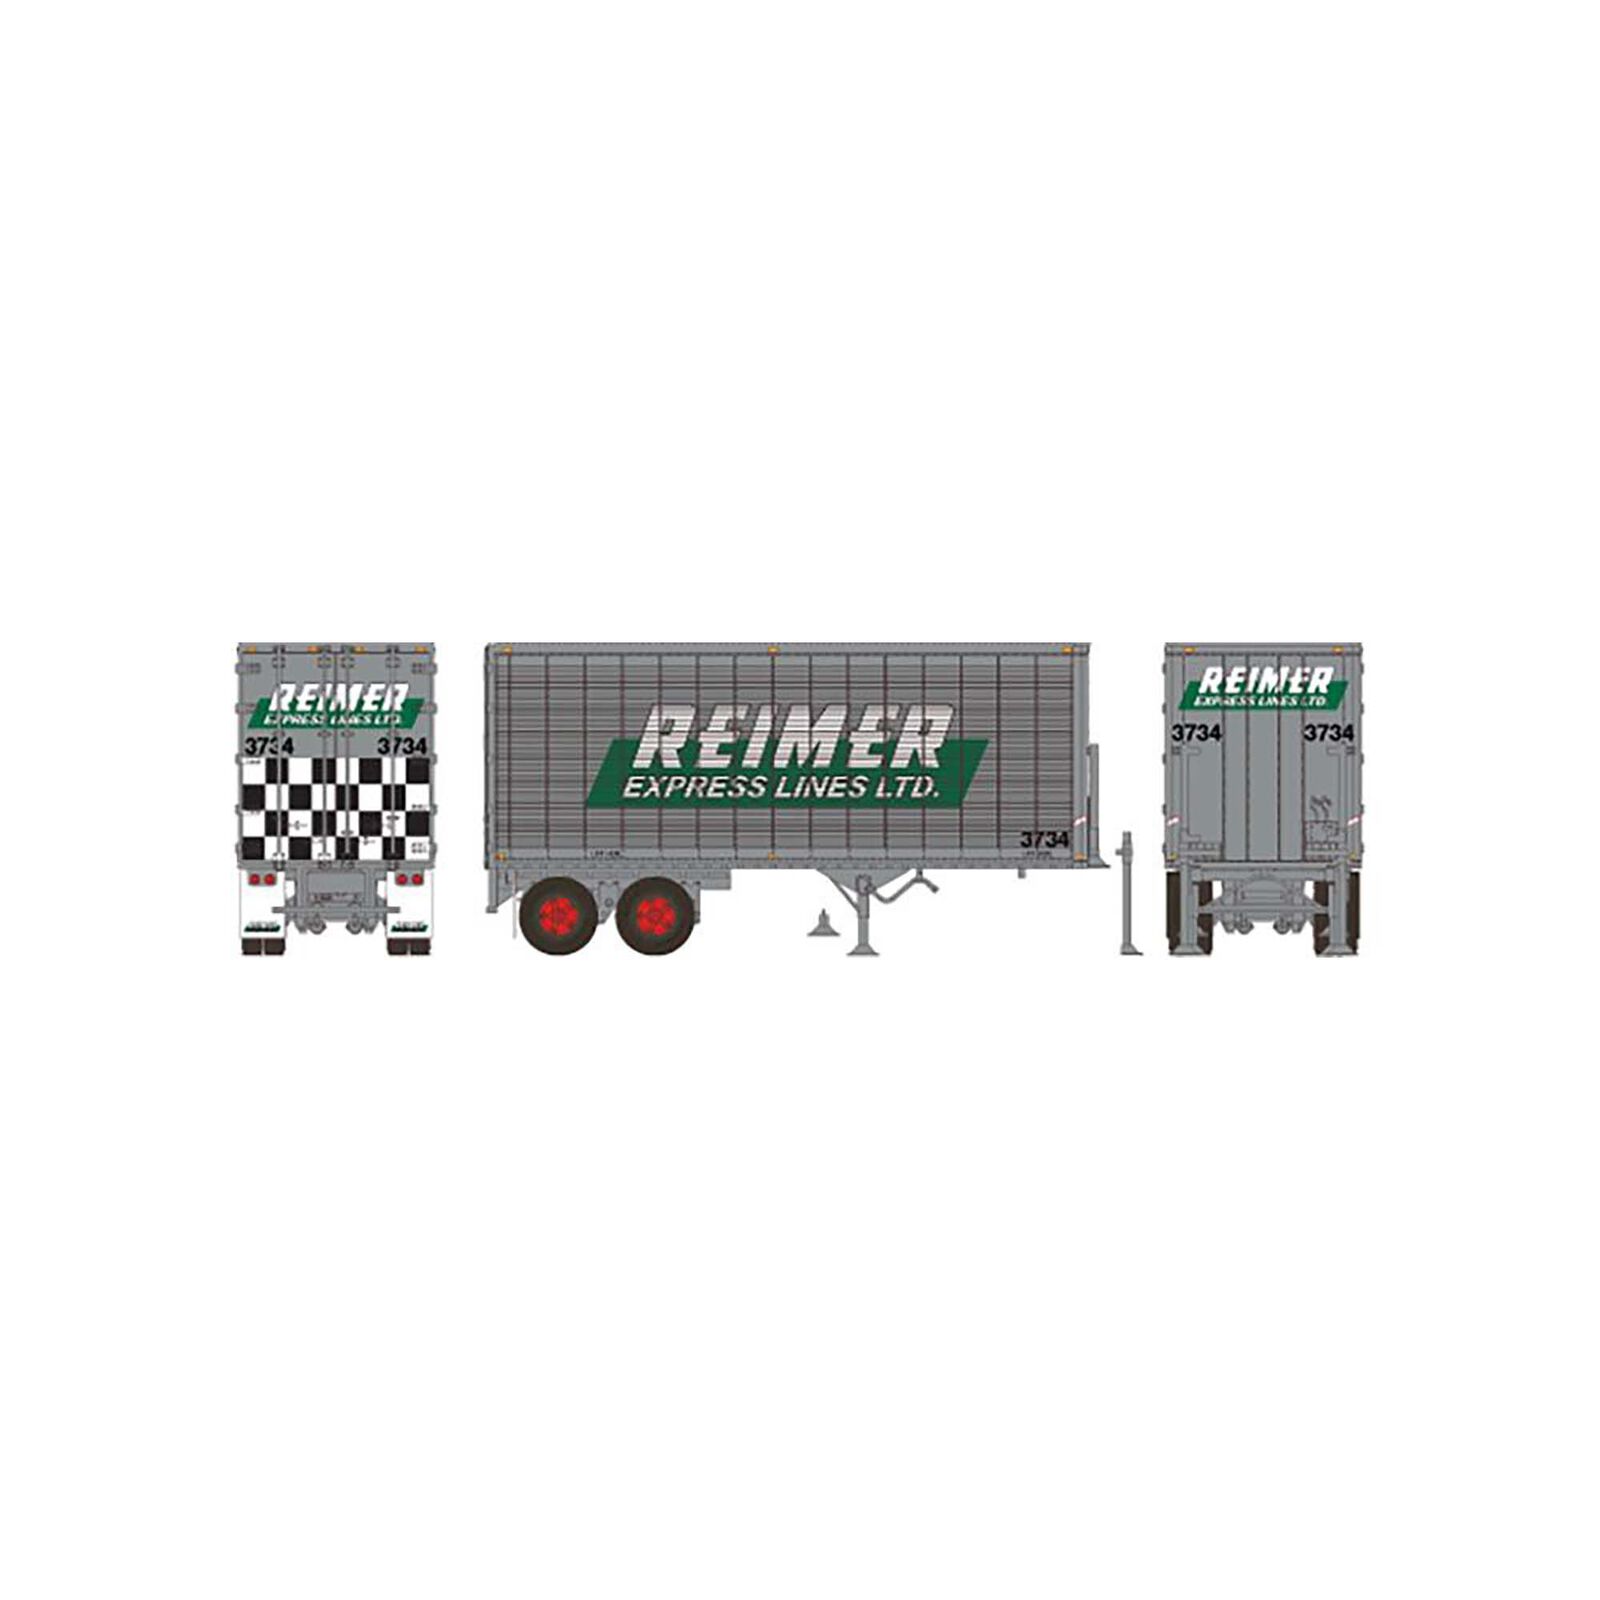 HO 26 Can-Car Trailer Reimer Trucking #3768